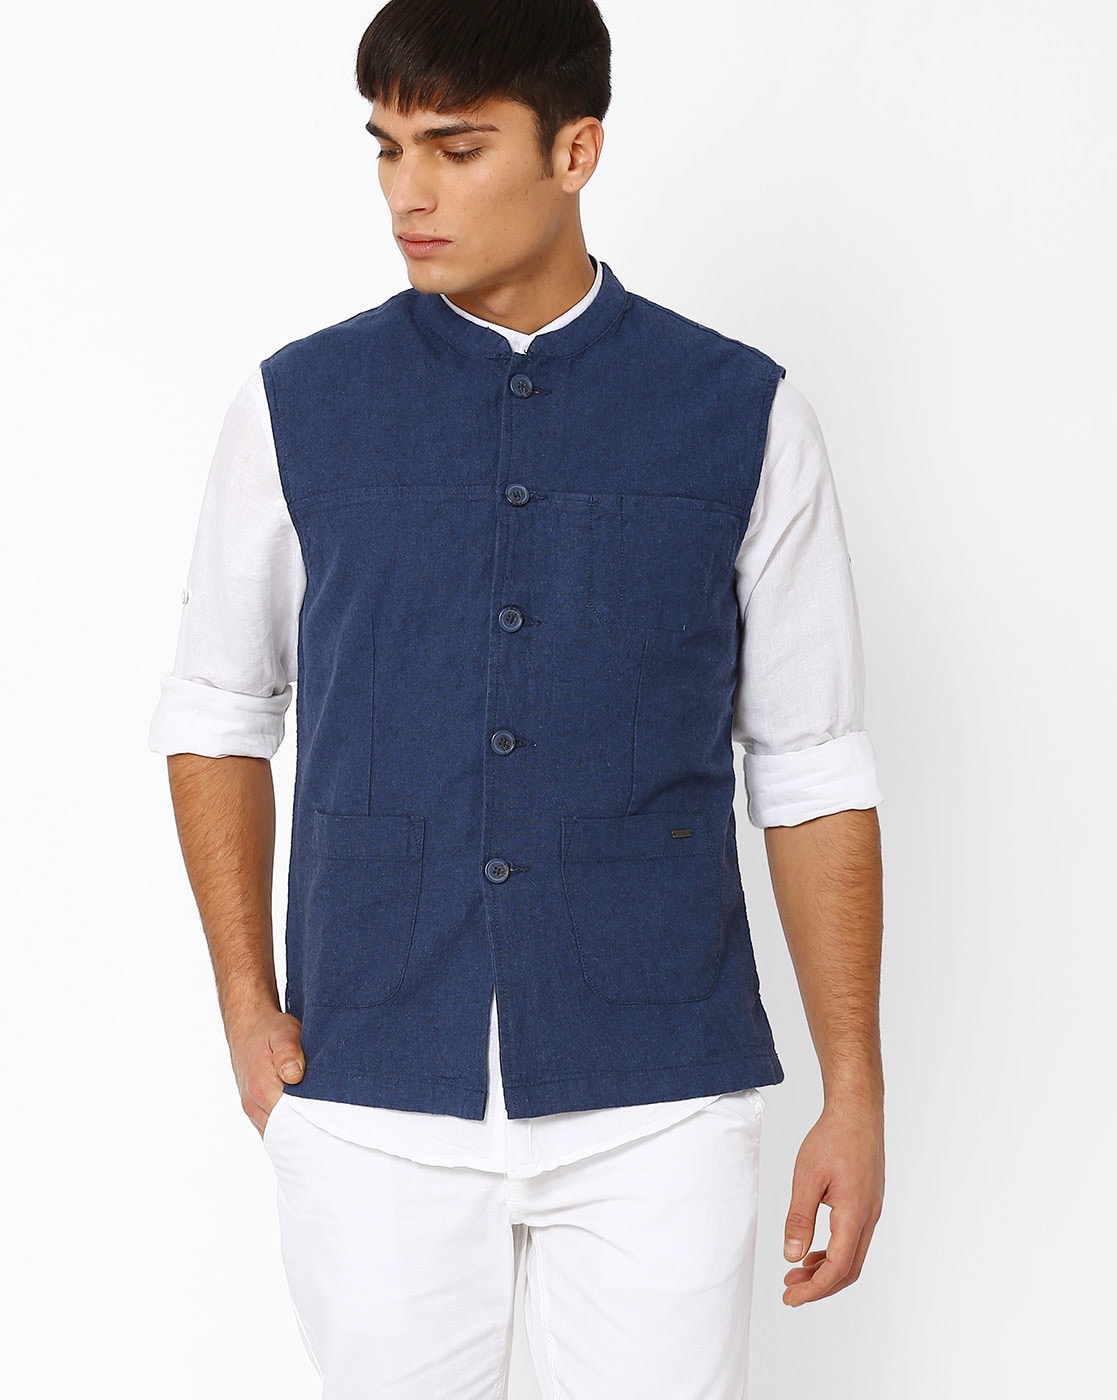 Maxence Nehru Jackets  Buy Maxence Navy Blue Woven Nehru Jacket Online   Nykaa Fashion